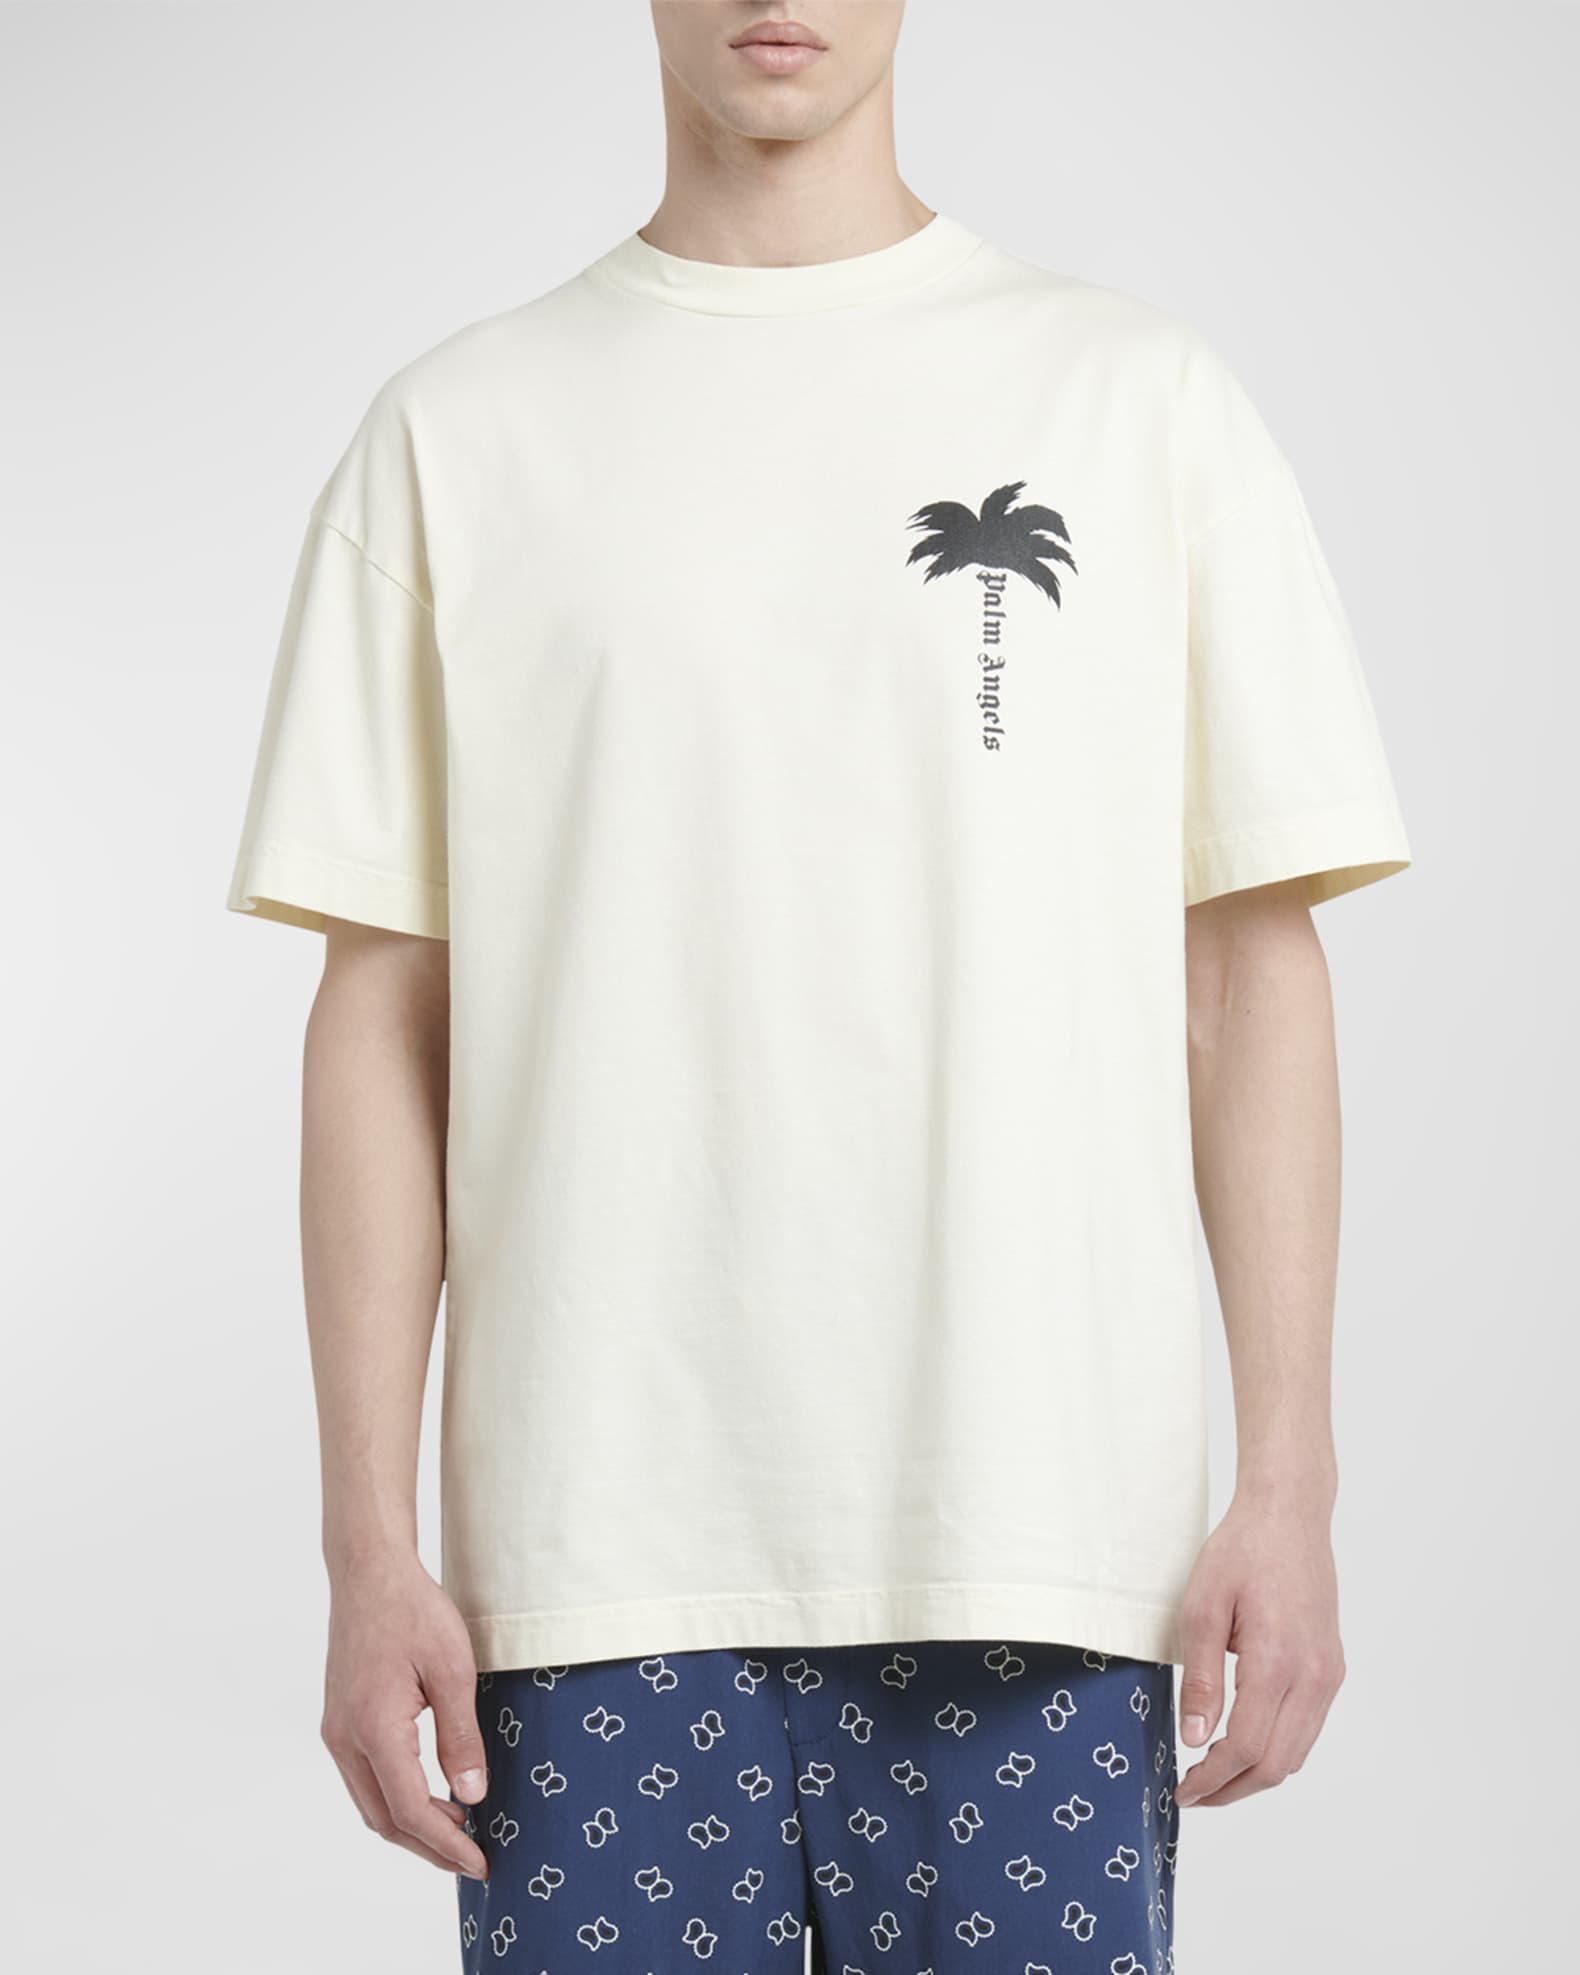 Palm Angels Monogram striped cotton shirt - White